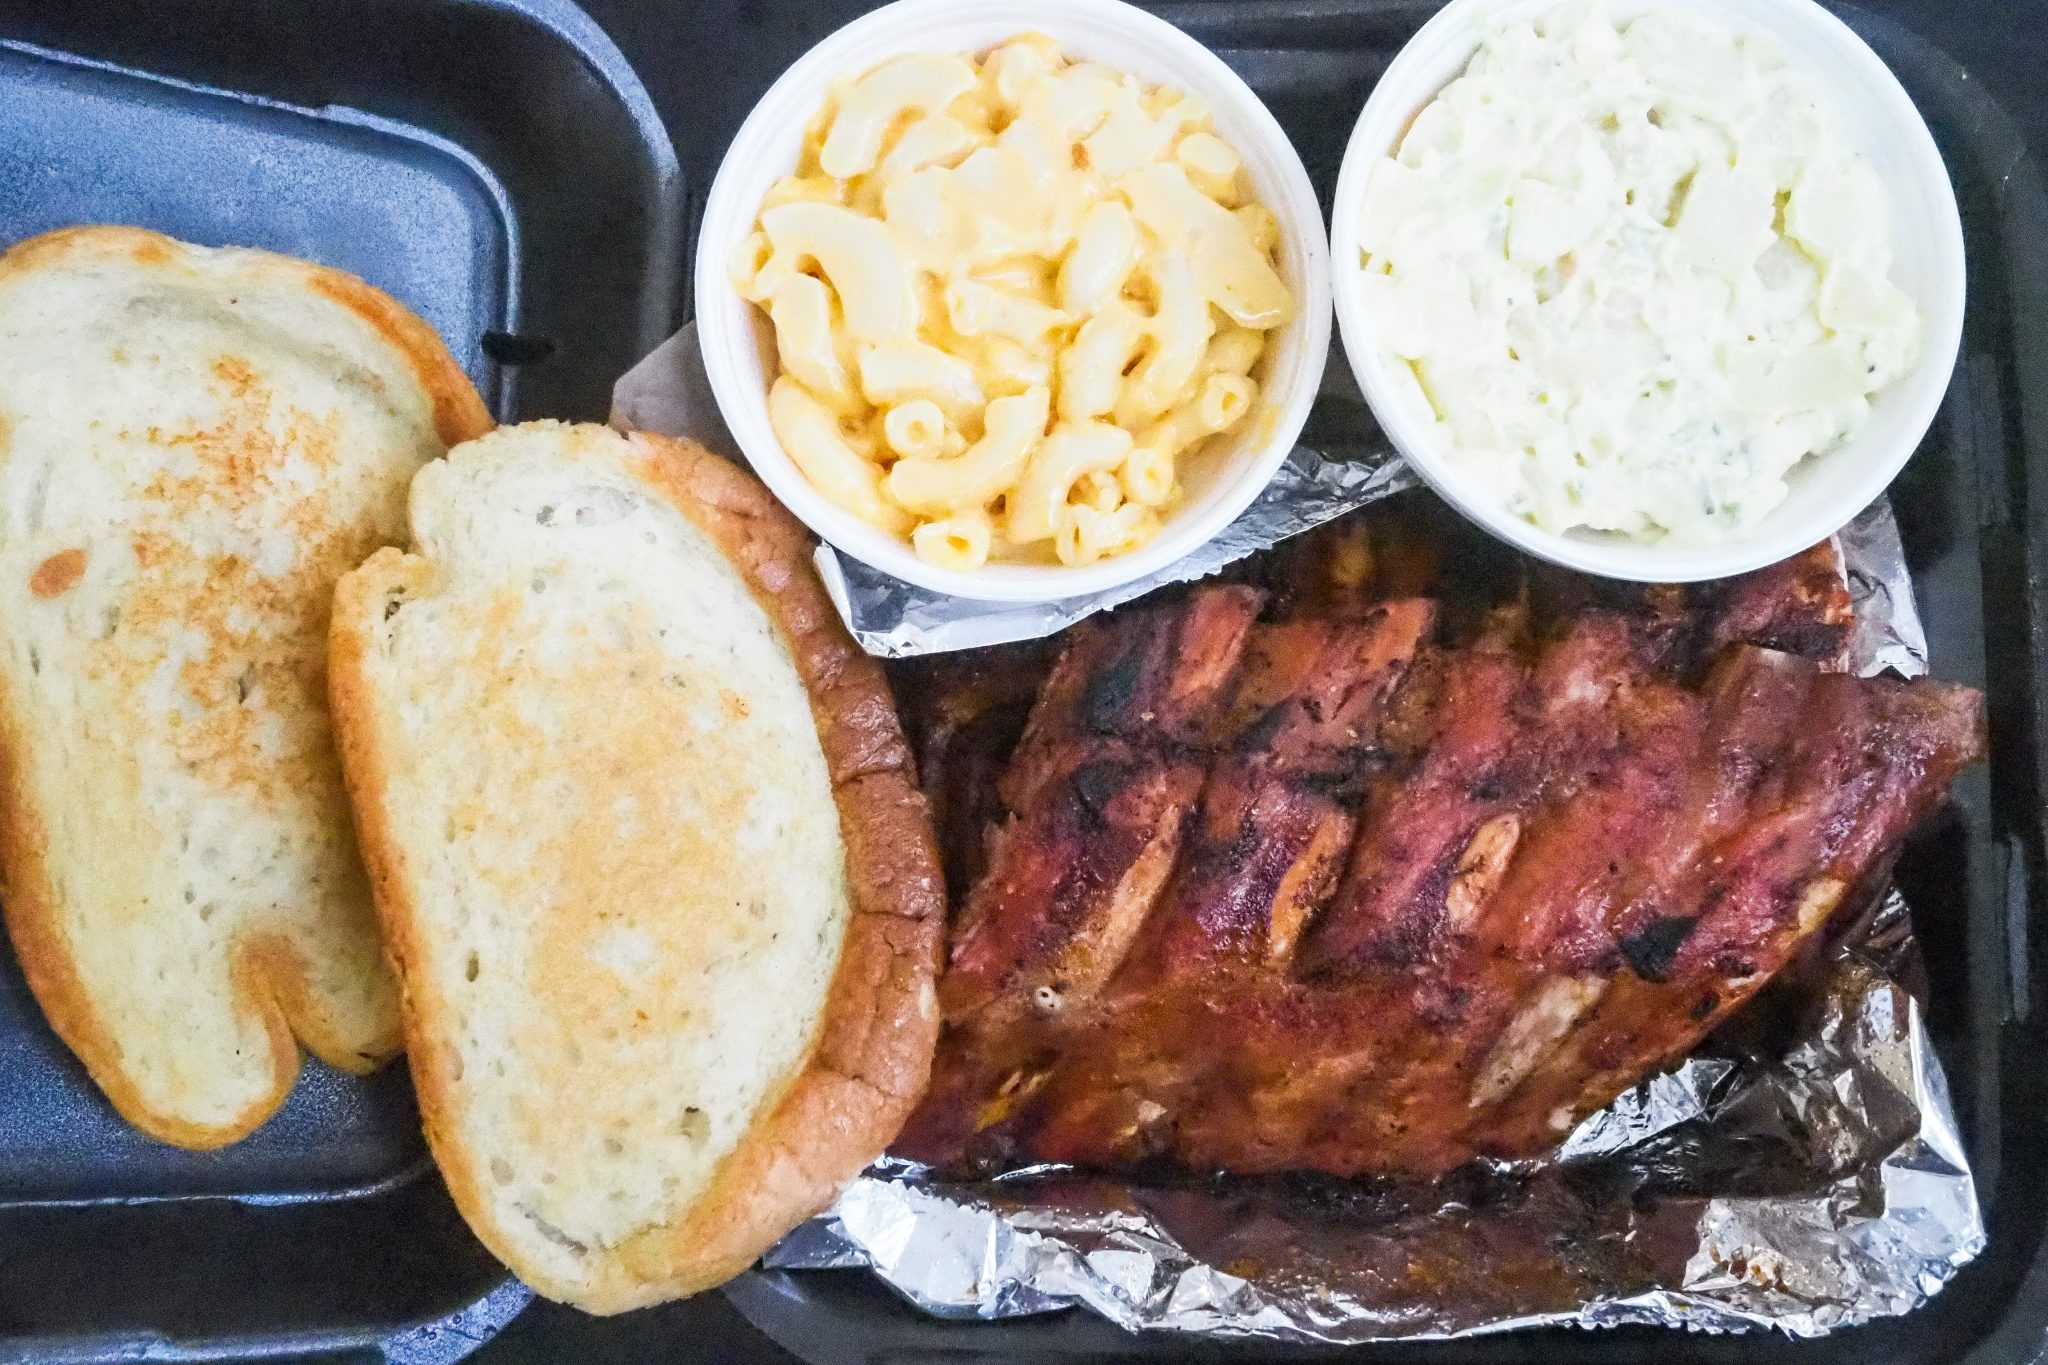 #OrlandoToGo - Sonny's BBQ Family Meal Deals To Go - Tasty Chomps: A